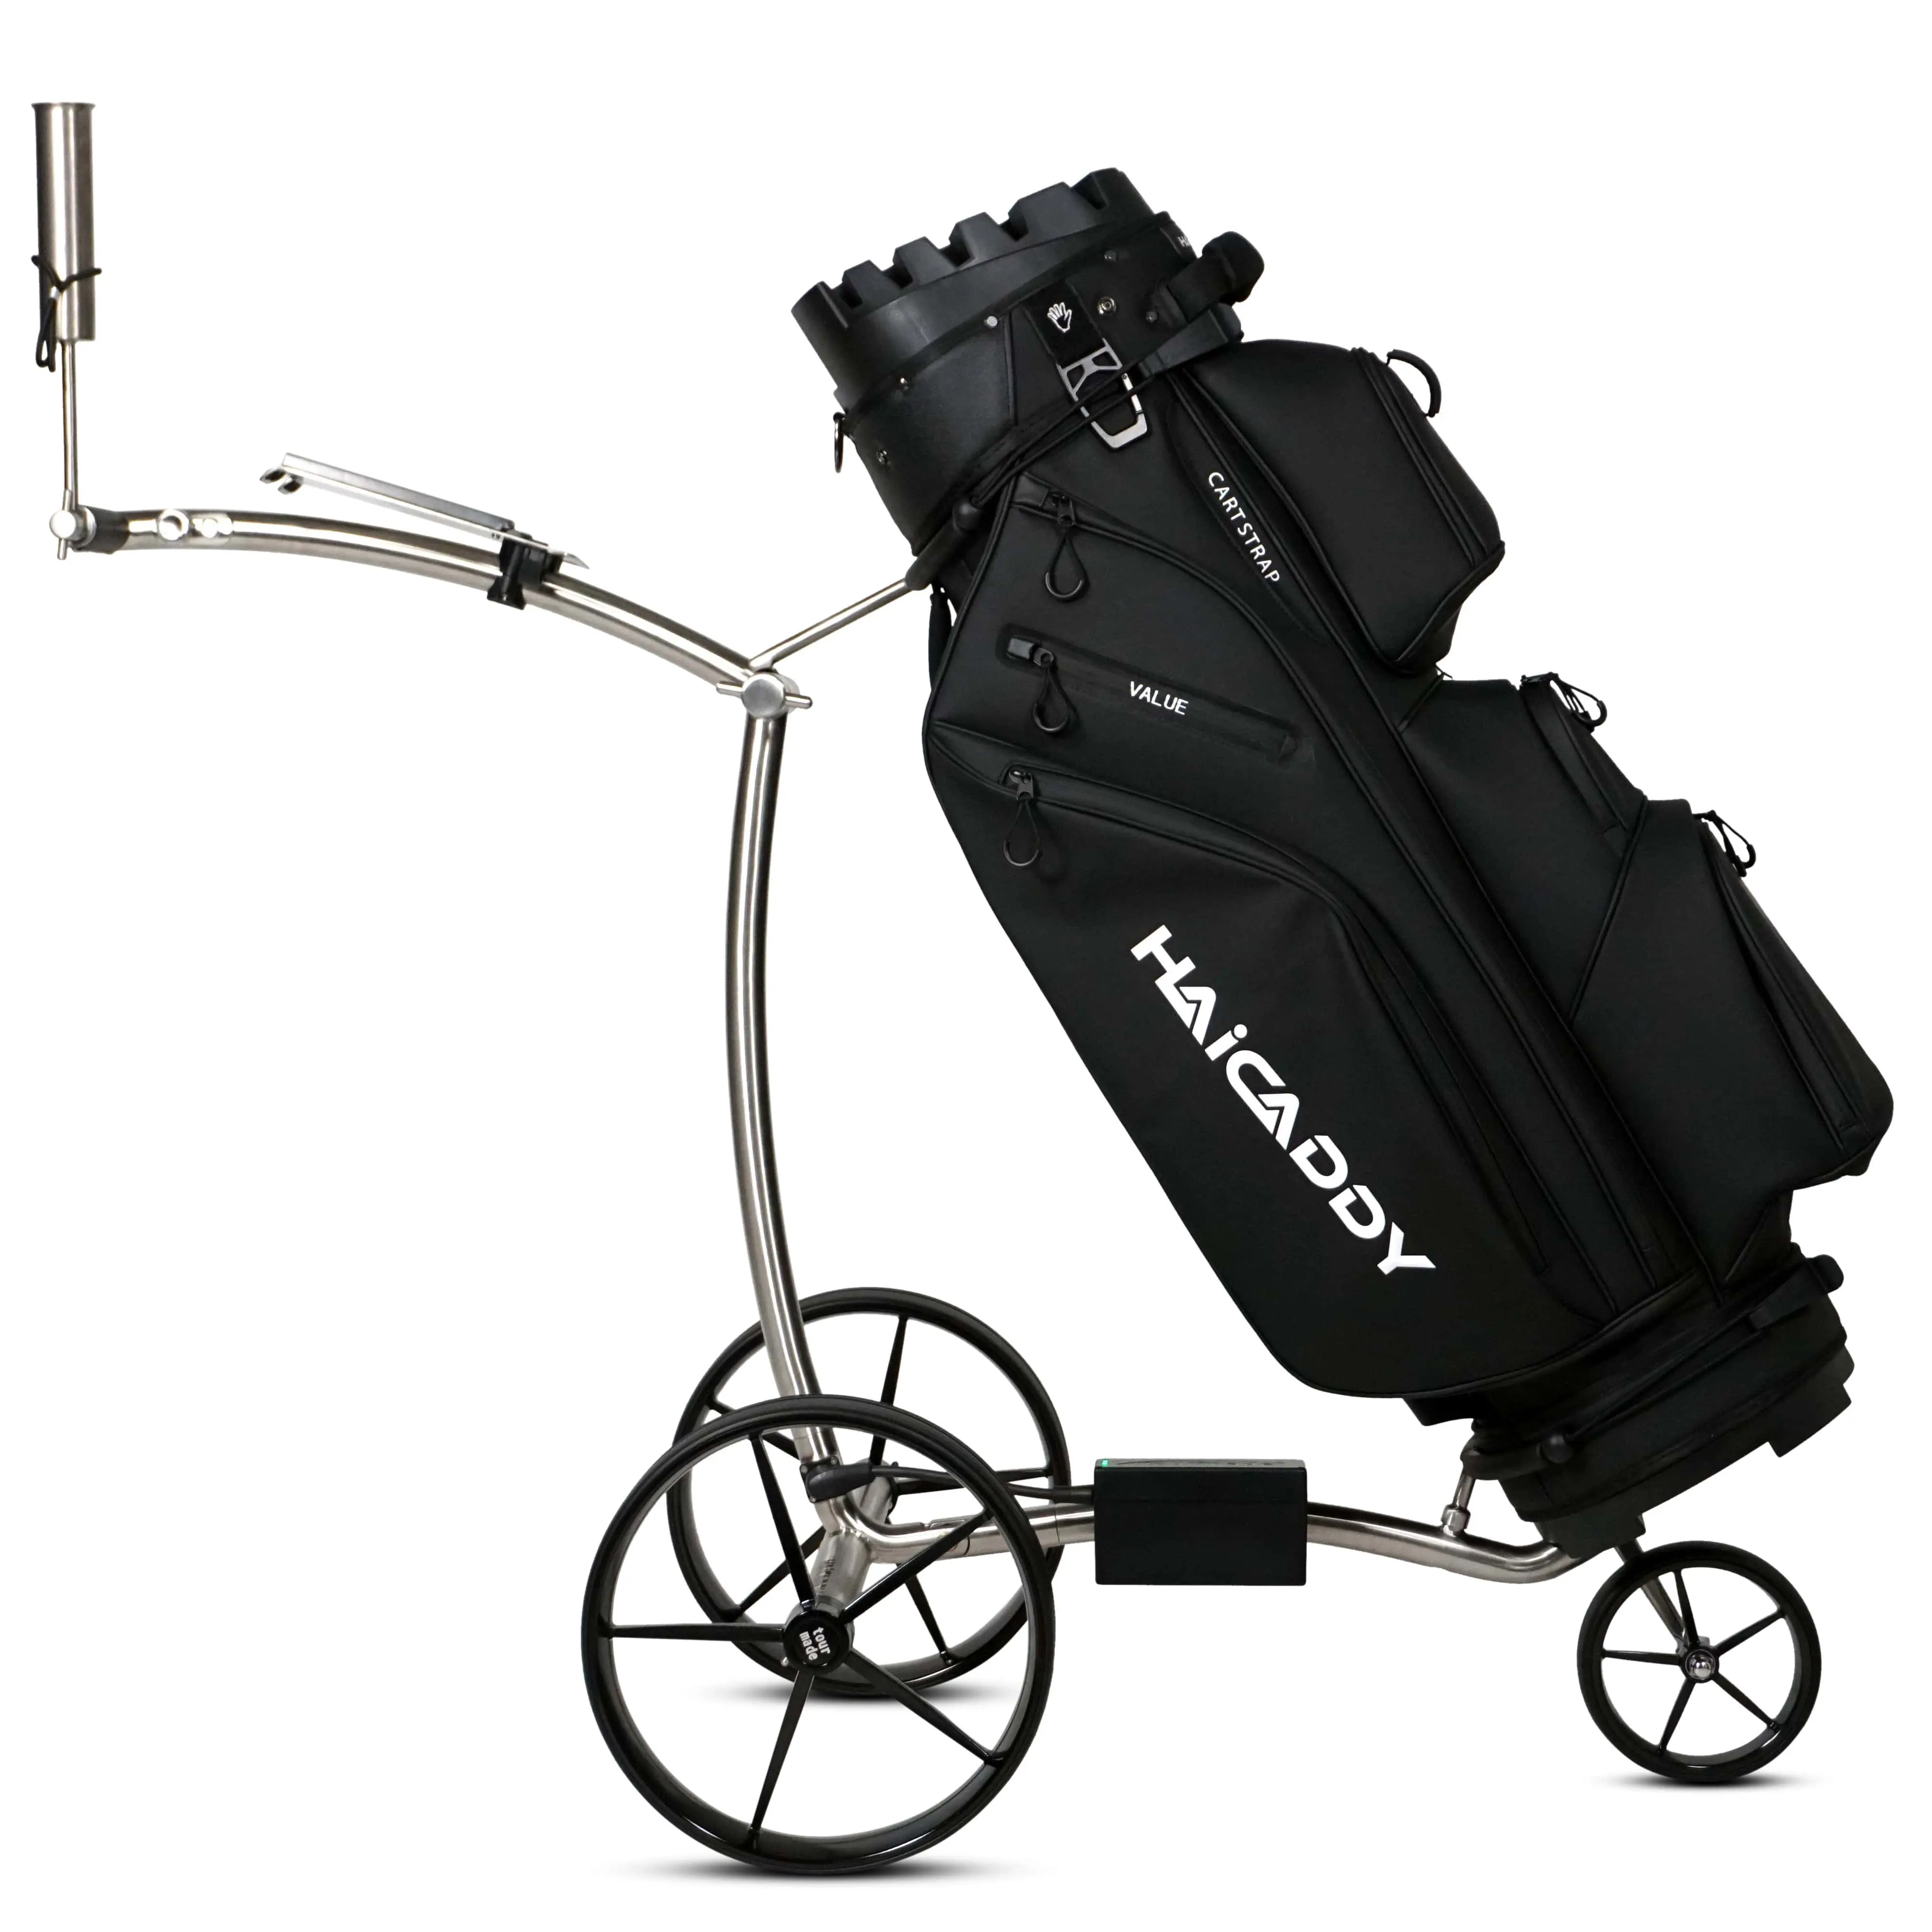 Tour Made Haicaddy® HC9S carrello da golf elettrico telaio curvo spazzolato